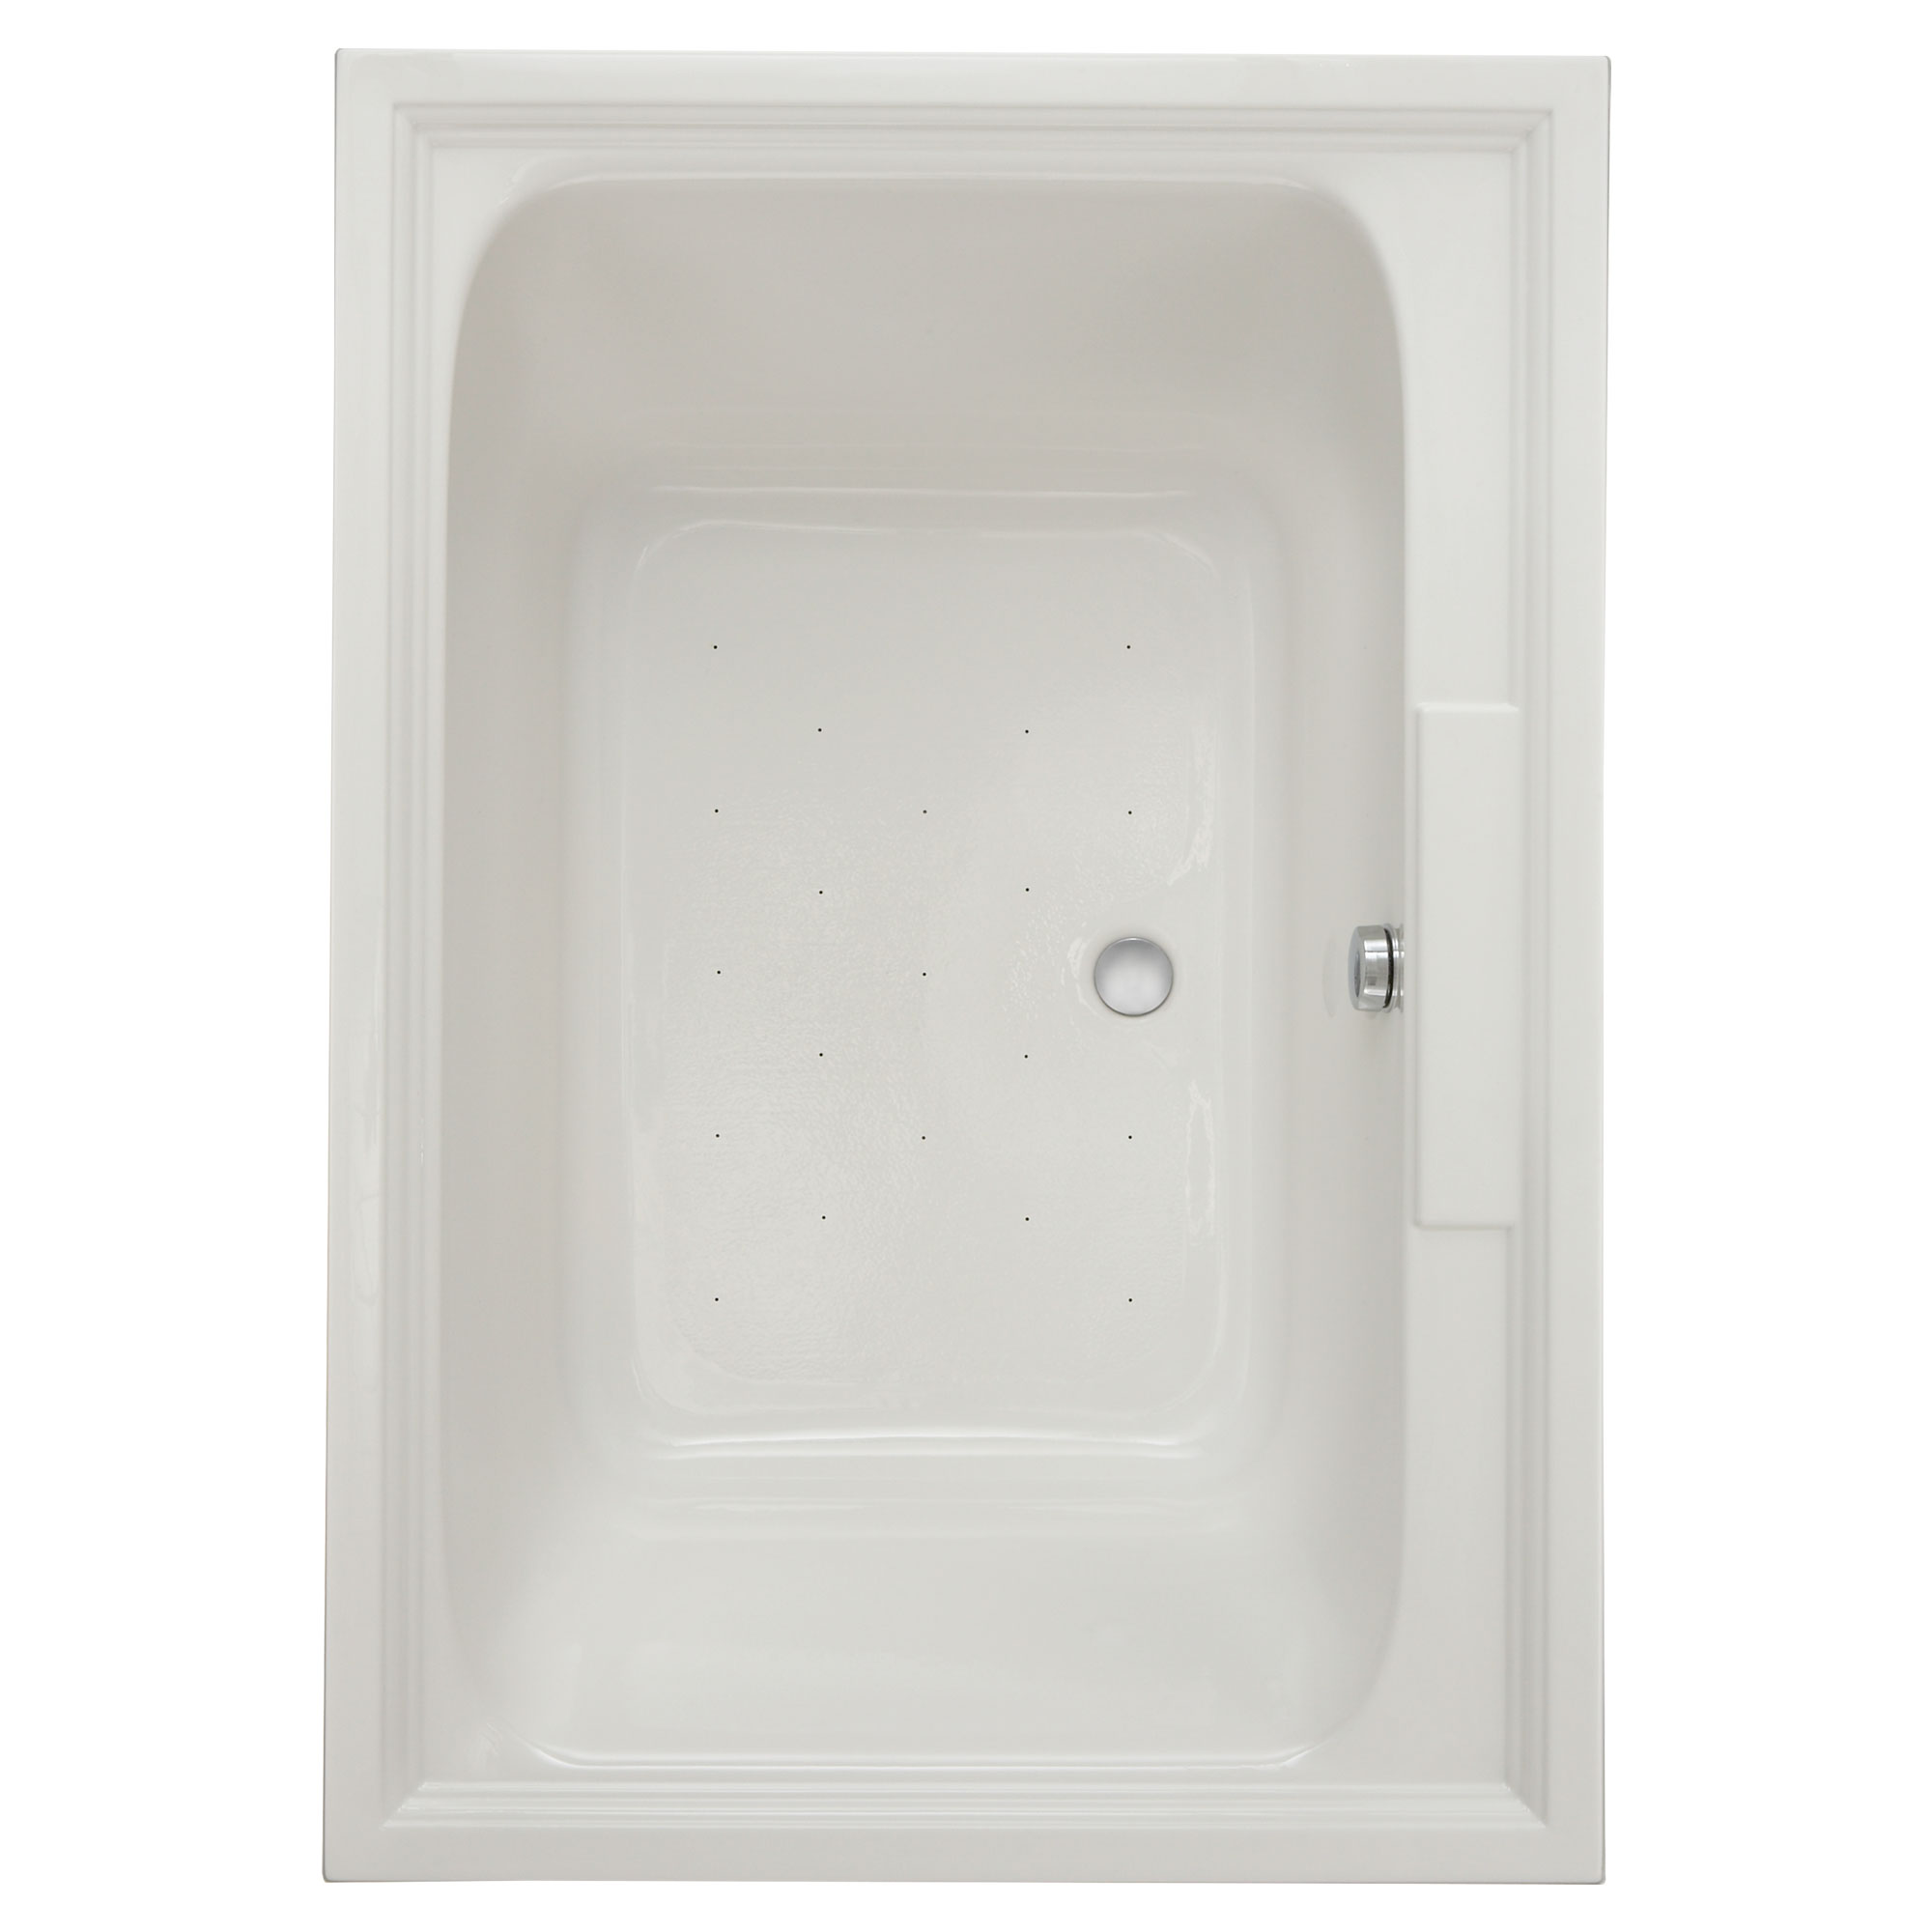 Town Square™ 60 x 42-Inch Drop-In Bathtub